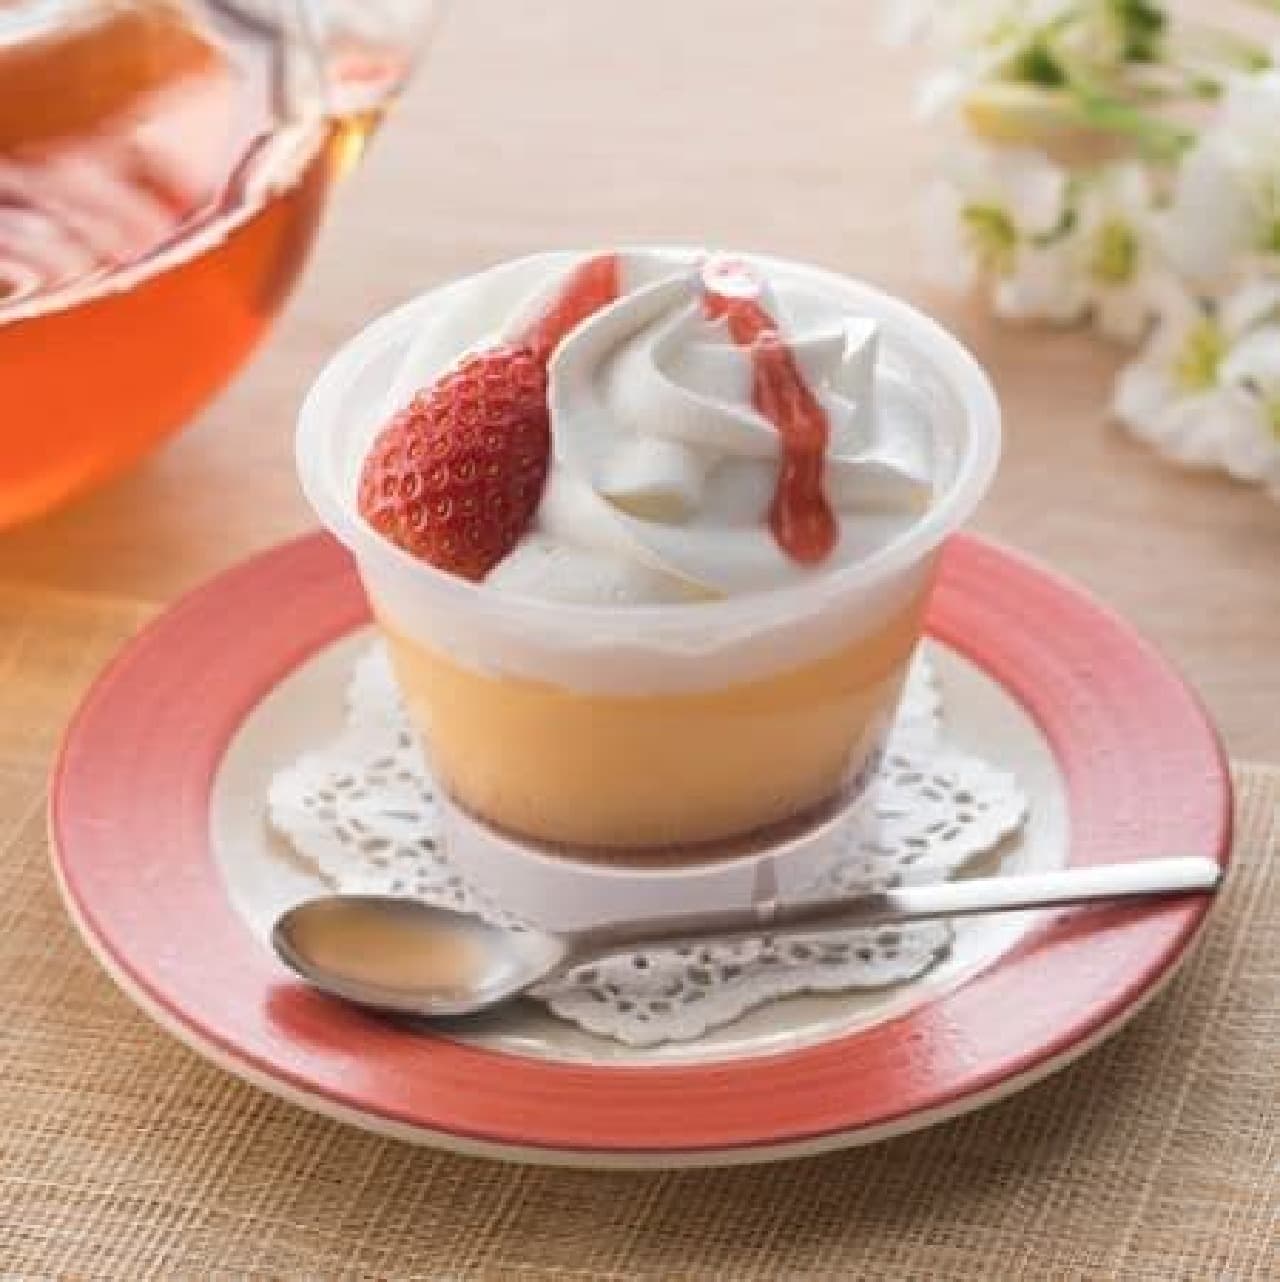 FamilyMart "Cream Kiln Out Pudding-Strawberry Place-"